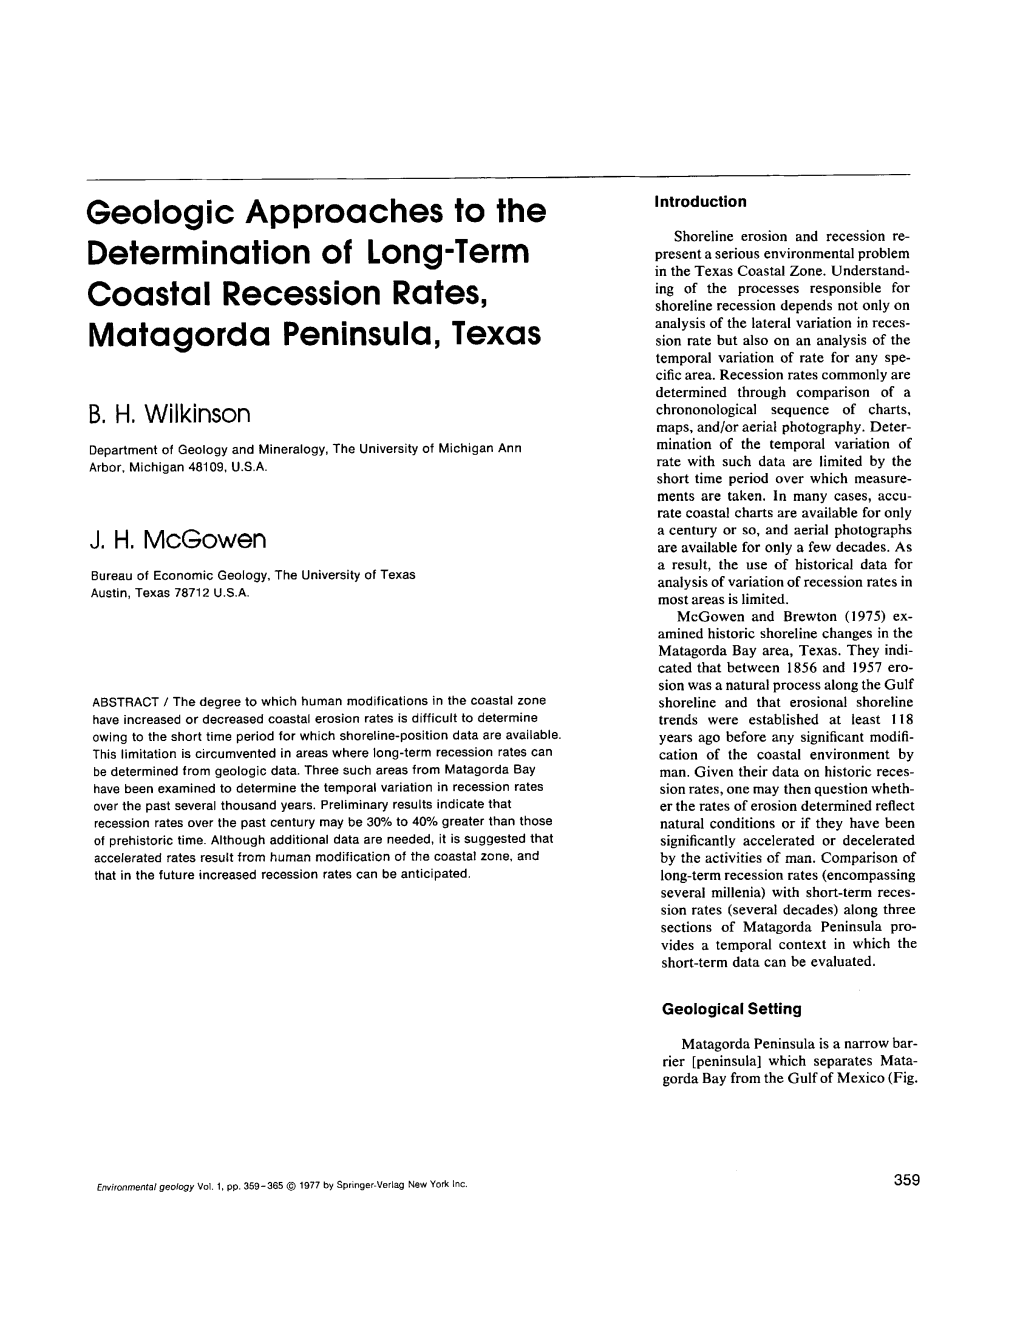 Geologic Approaches to the Determination of Long-Term Coastal Recession Rates, T-~ .1 Matagorda Peninsula, Texas U